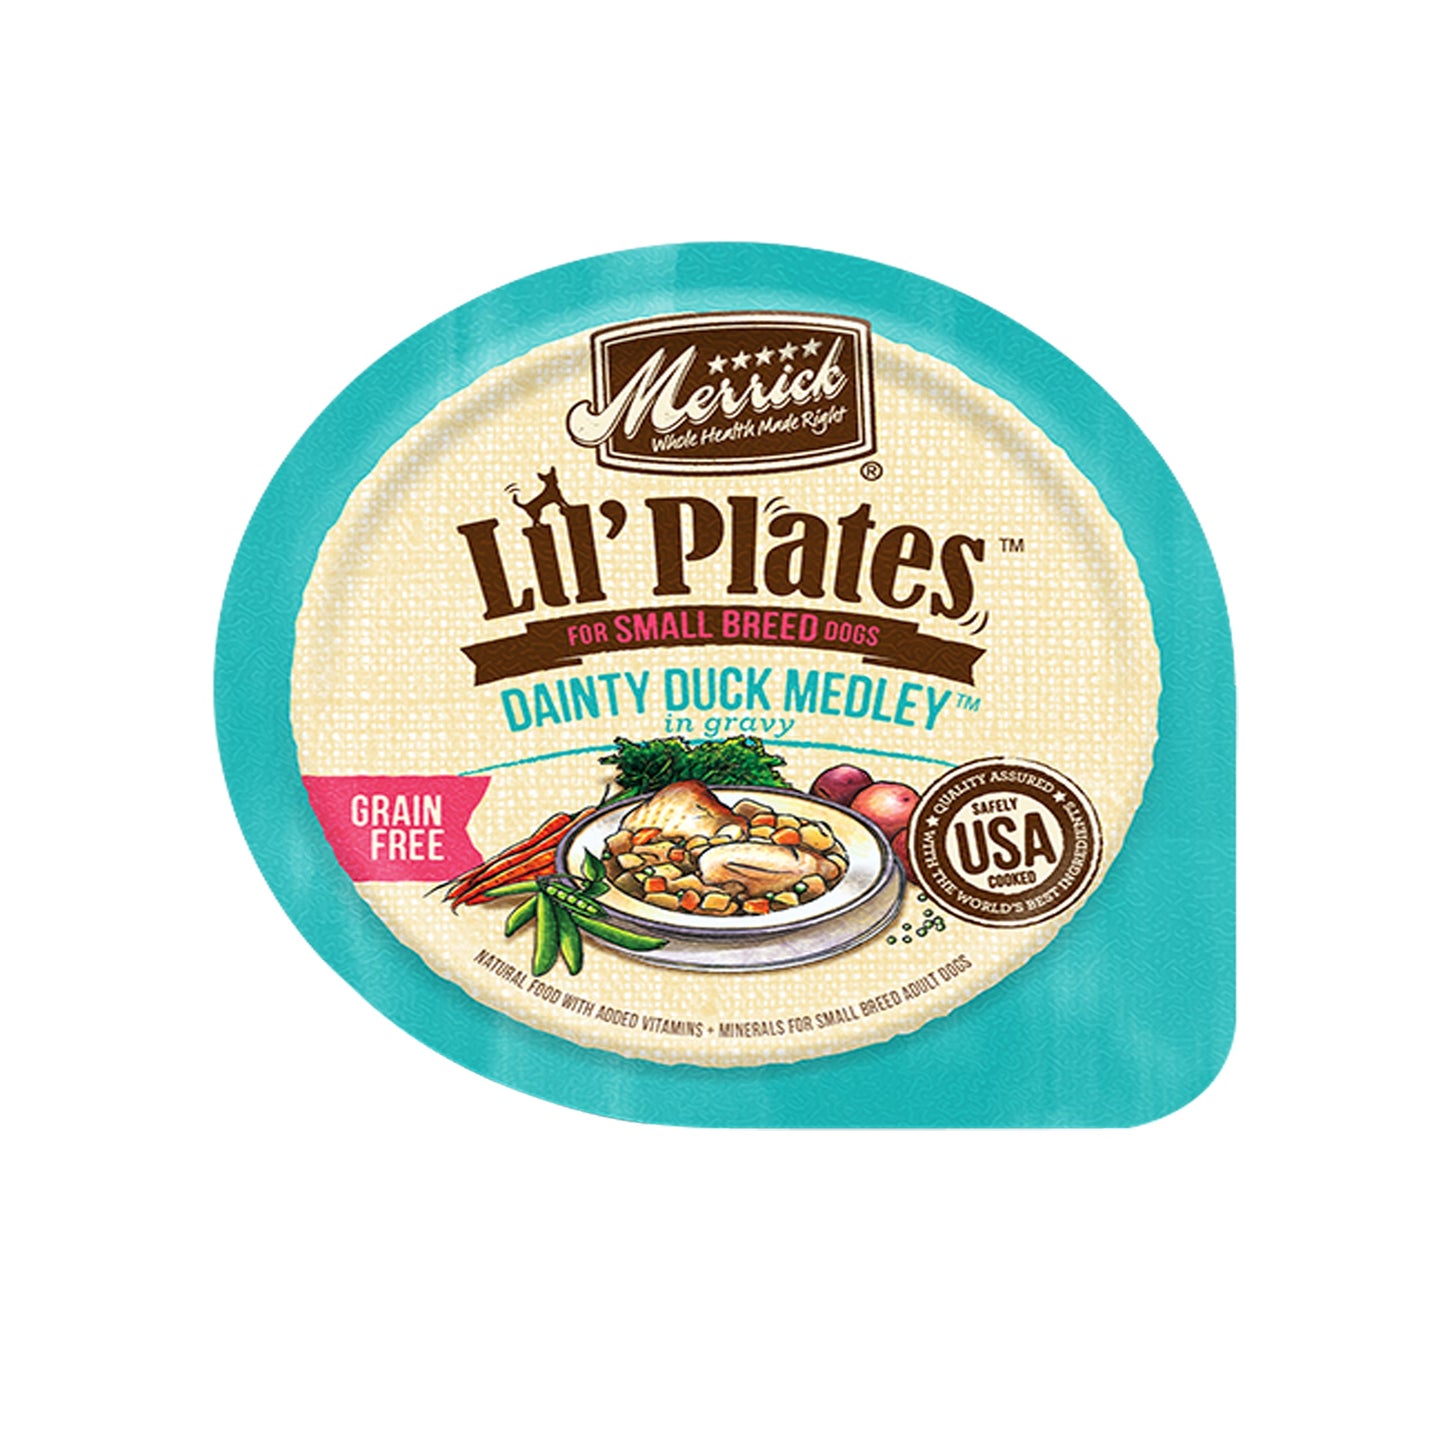 Merrick Lil Plates Grain Free Dainty Duck Medley Dog Food 3.5oz. (Case of 12)